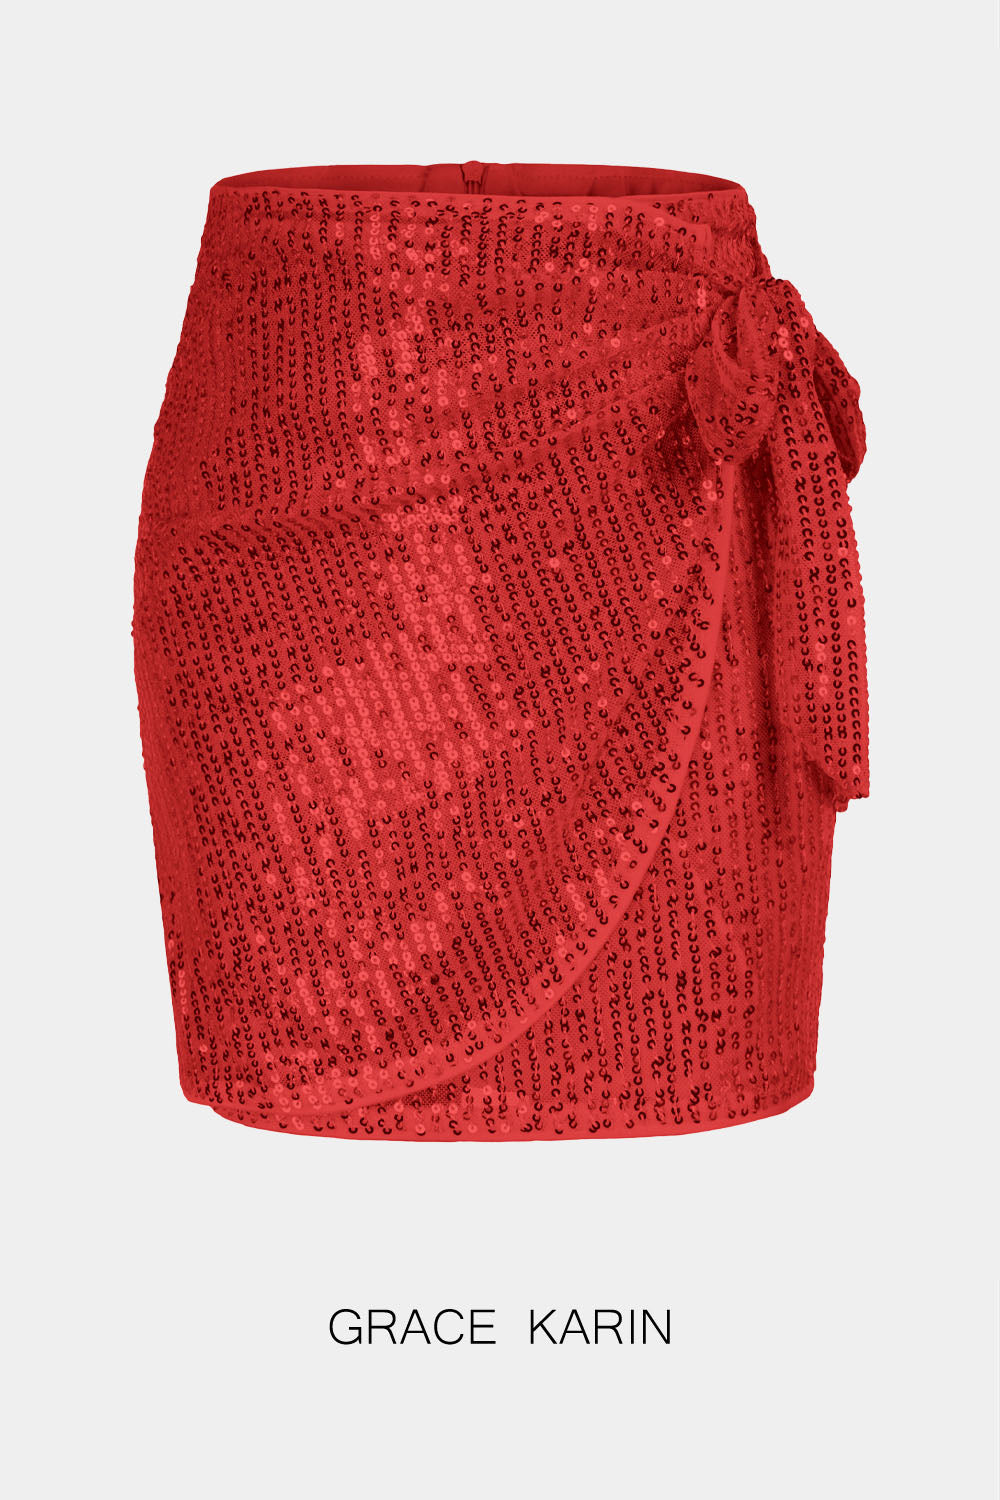 【$19.99 Flash Sale!】GRACE KARIN Kids Sequined Mini Skirt Little Girls High Waist Bow-Knot Decorated Skirt